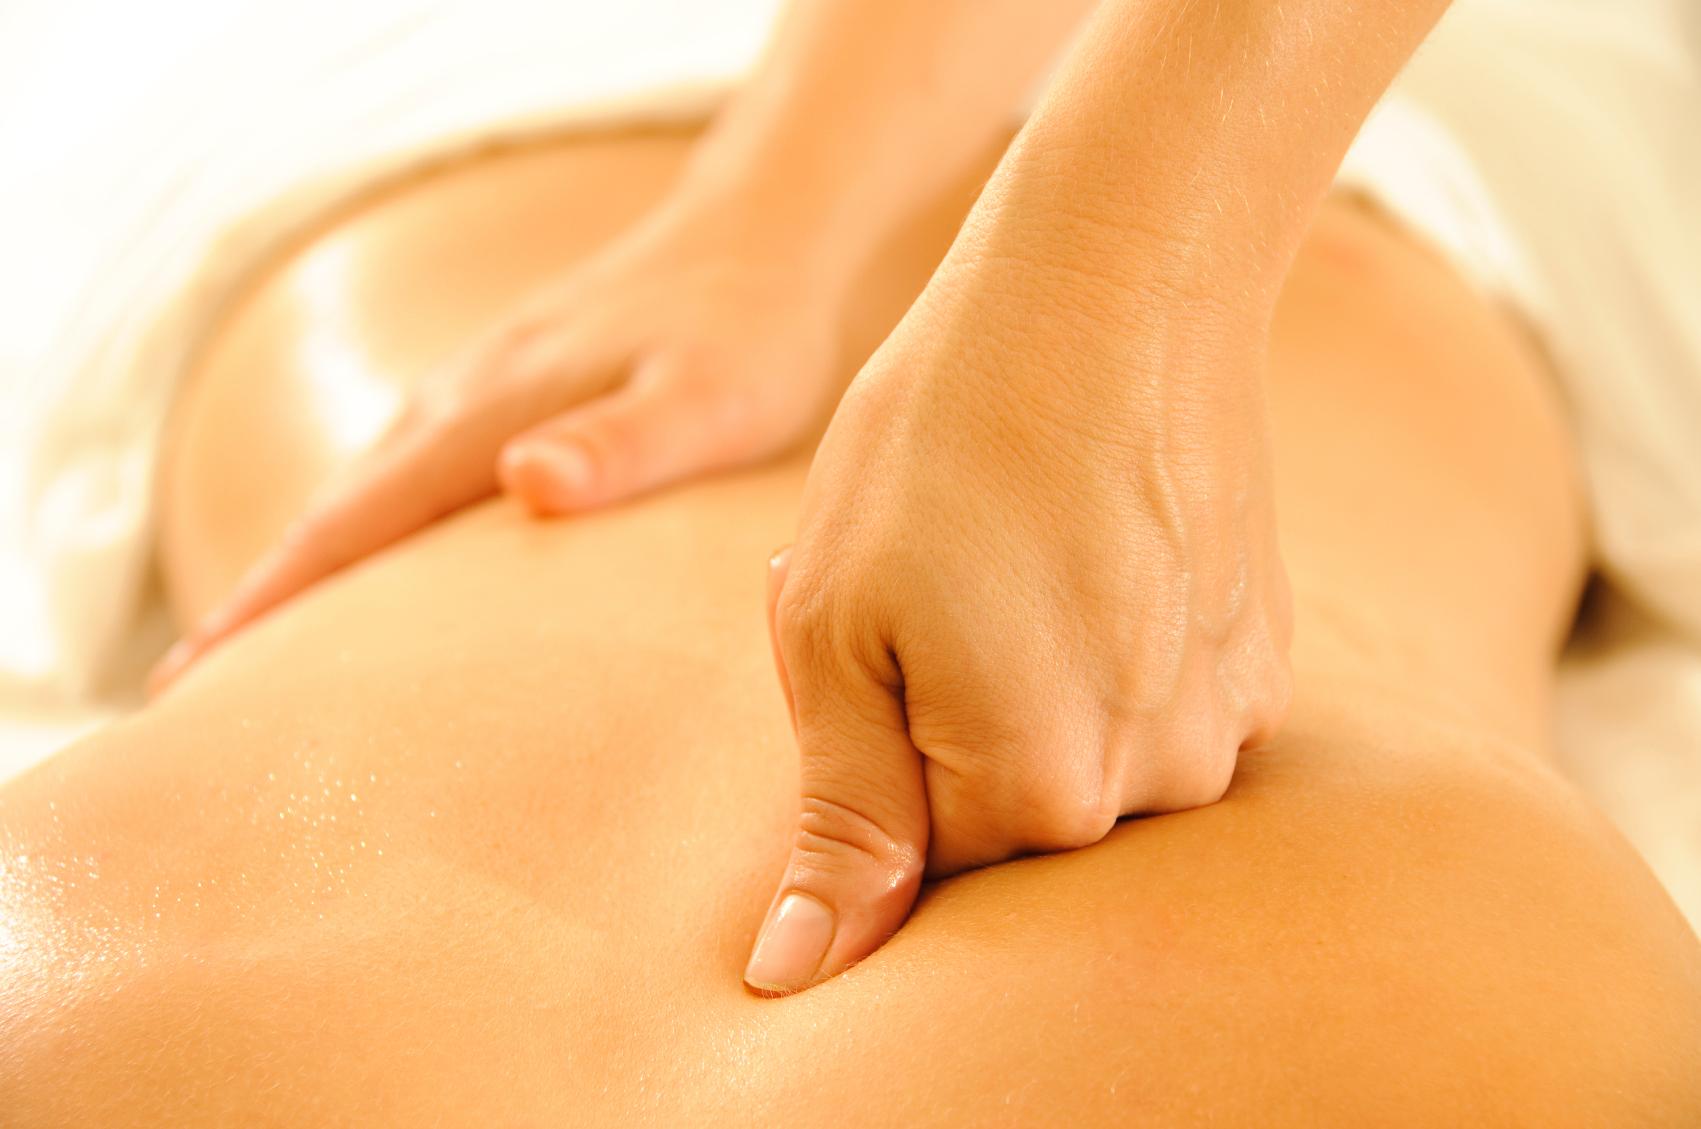 KAKO SE IZVODI MASAŽA LEĐA? – postupak uspešne masaže leđa